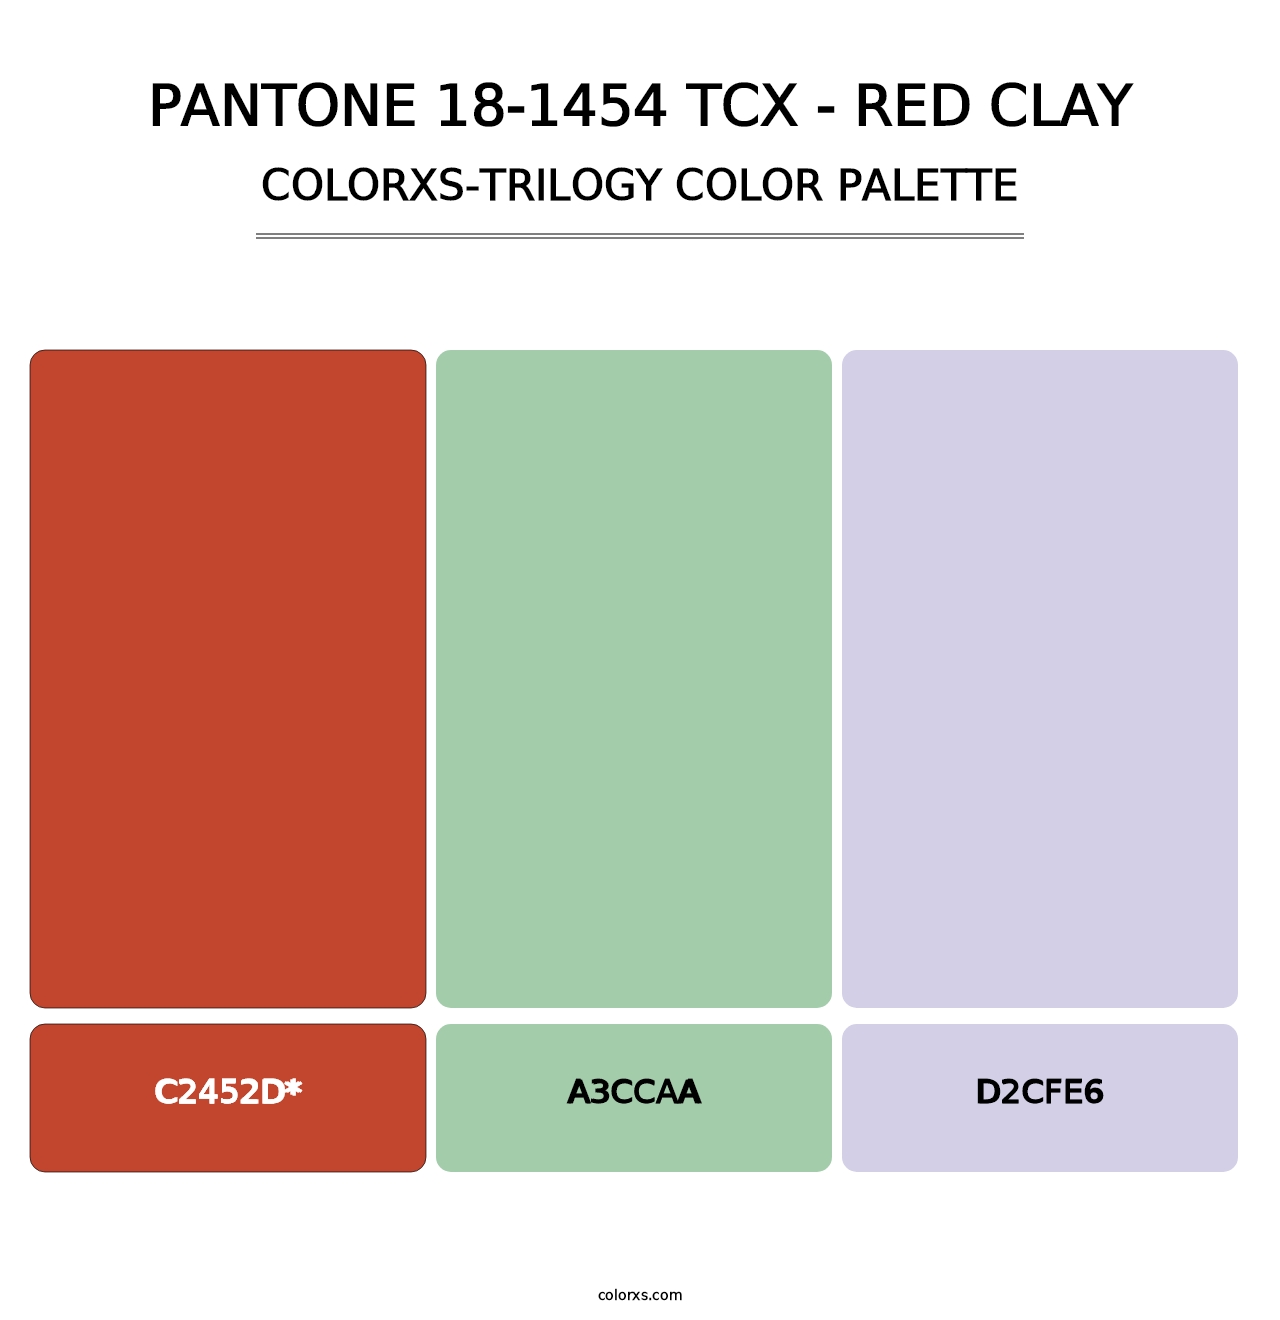 PANTONE 18-1454 TCX - Red Clay - Colorxs Trilogy Palette